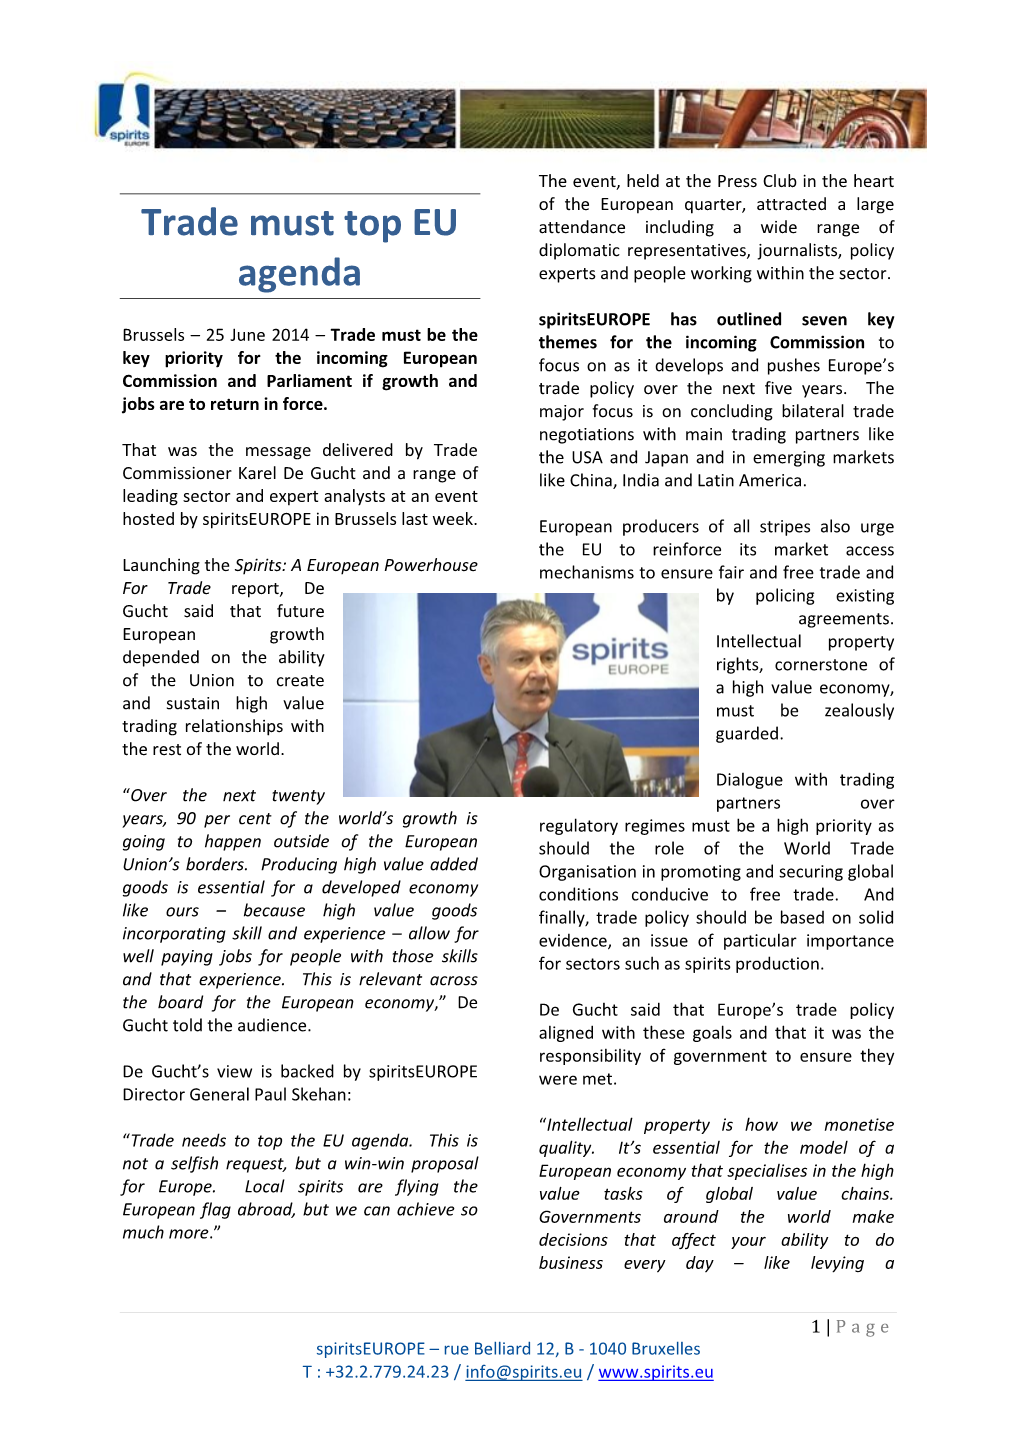 Trade Must Top EU Agenda